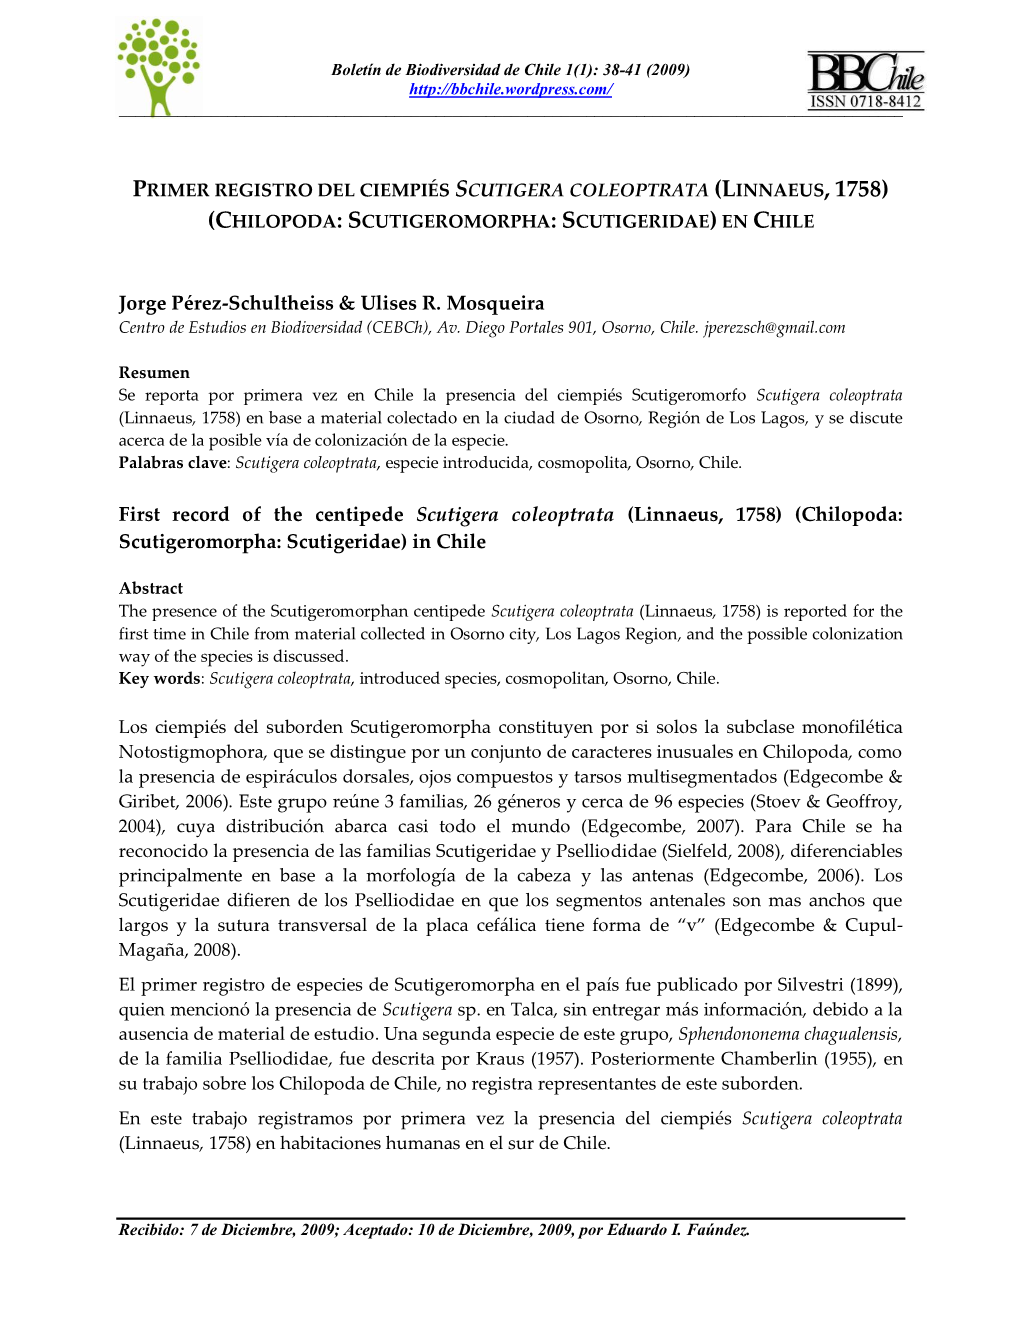 Primer Registro De Scutigera Coleoptrata (Linnaeus, 1758) (Chilopoda: Scutigeromorpha: Scutigeridae) En Chile